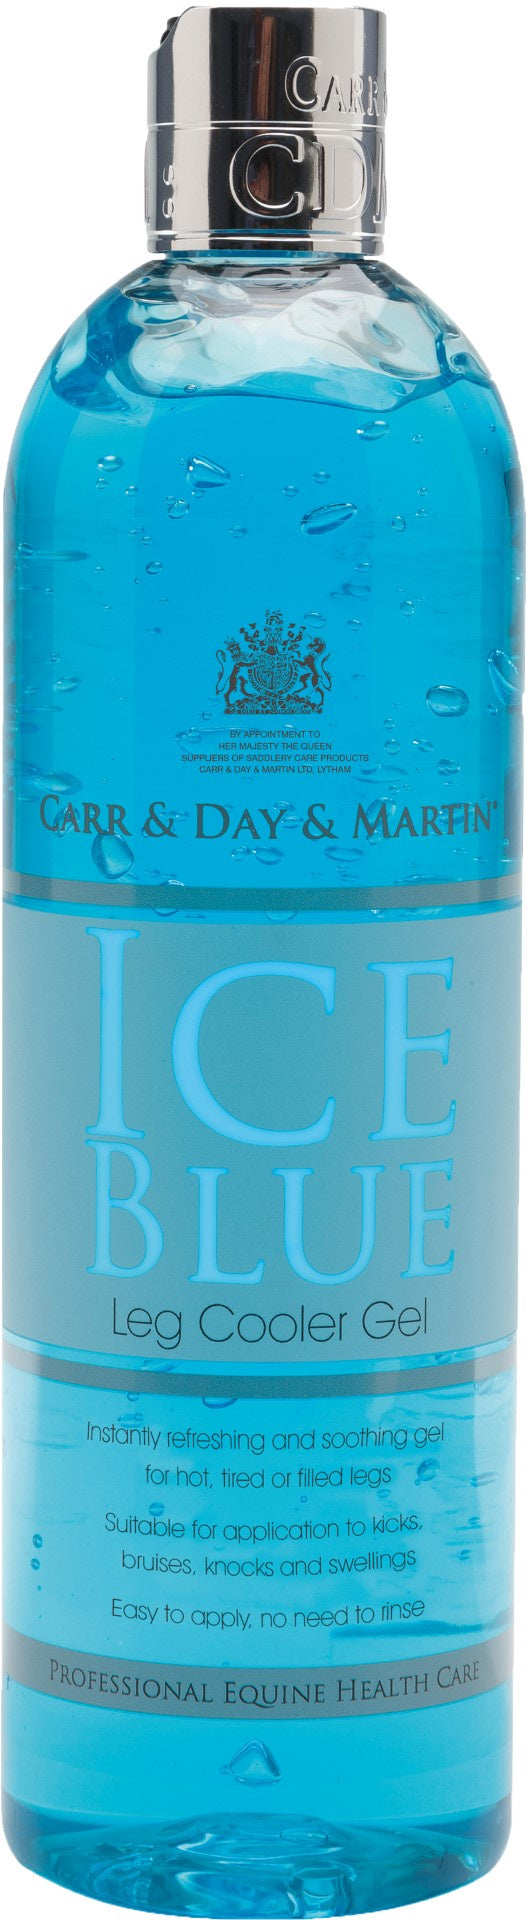 CDM Ice Blue Leg Cooler Gel 500ml